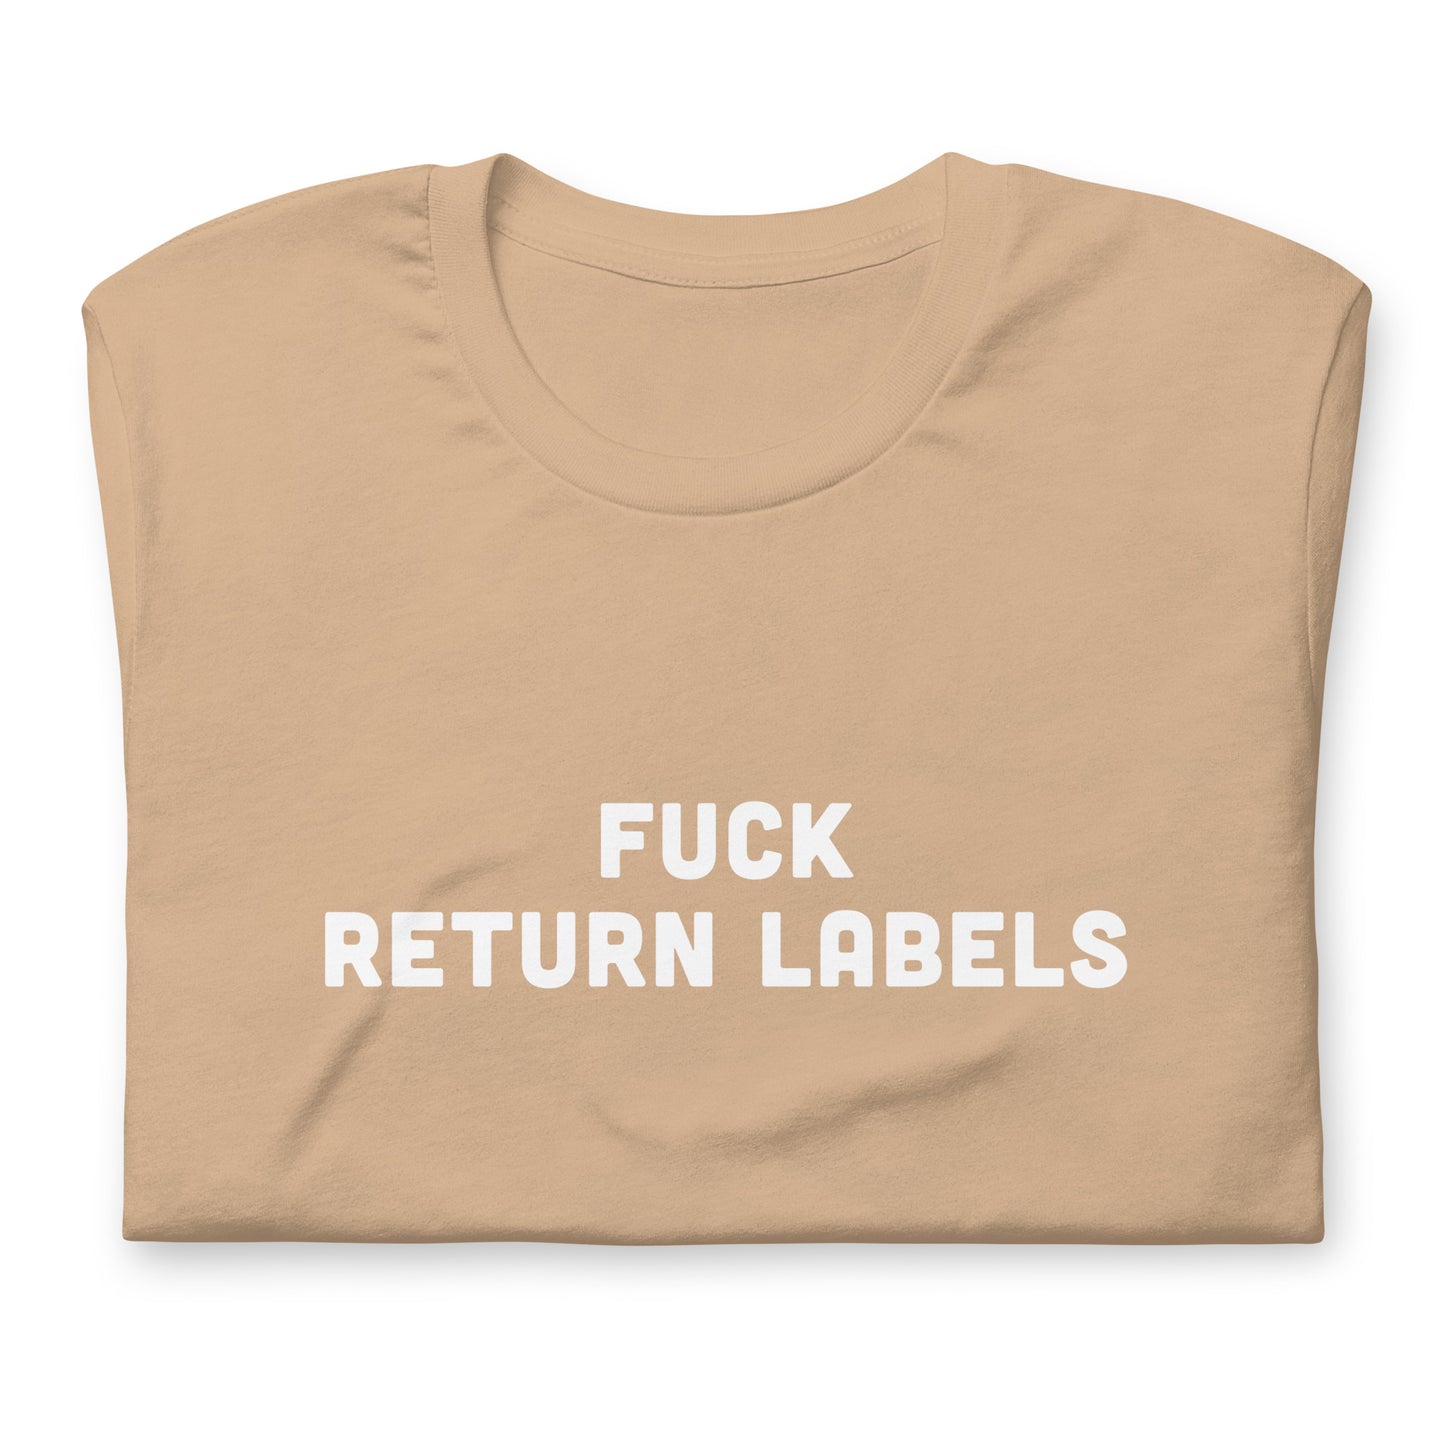 Fuck Return Labels T-Shirt Size XL Color Forest